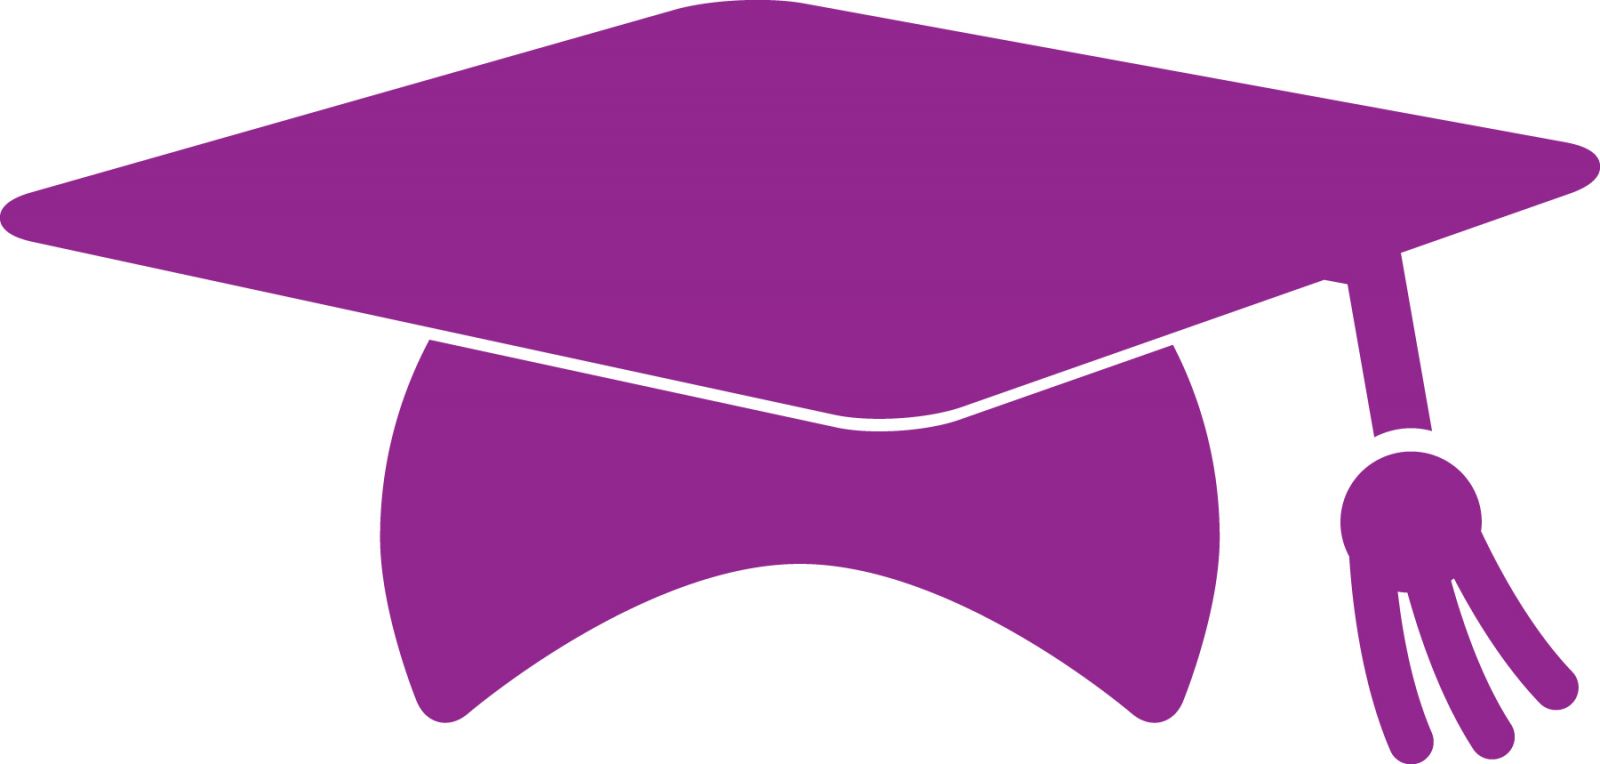 Graduation cap free download. 2016 clipart purple